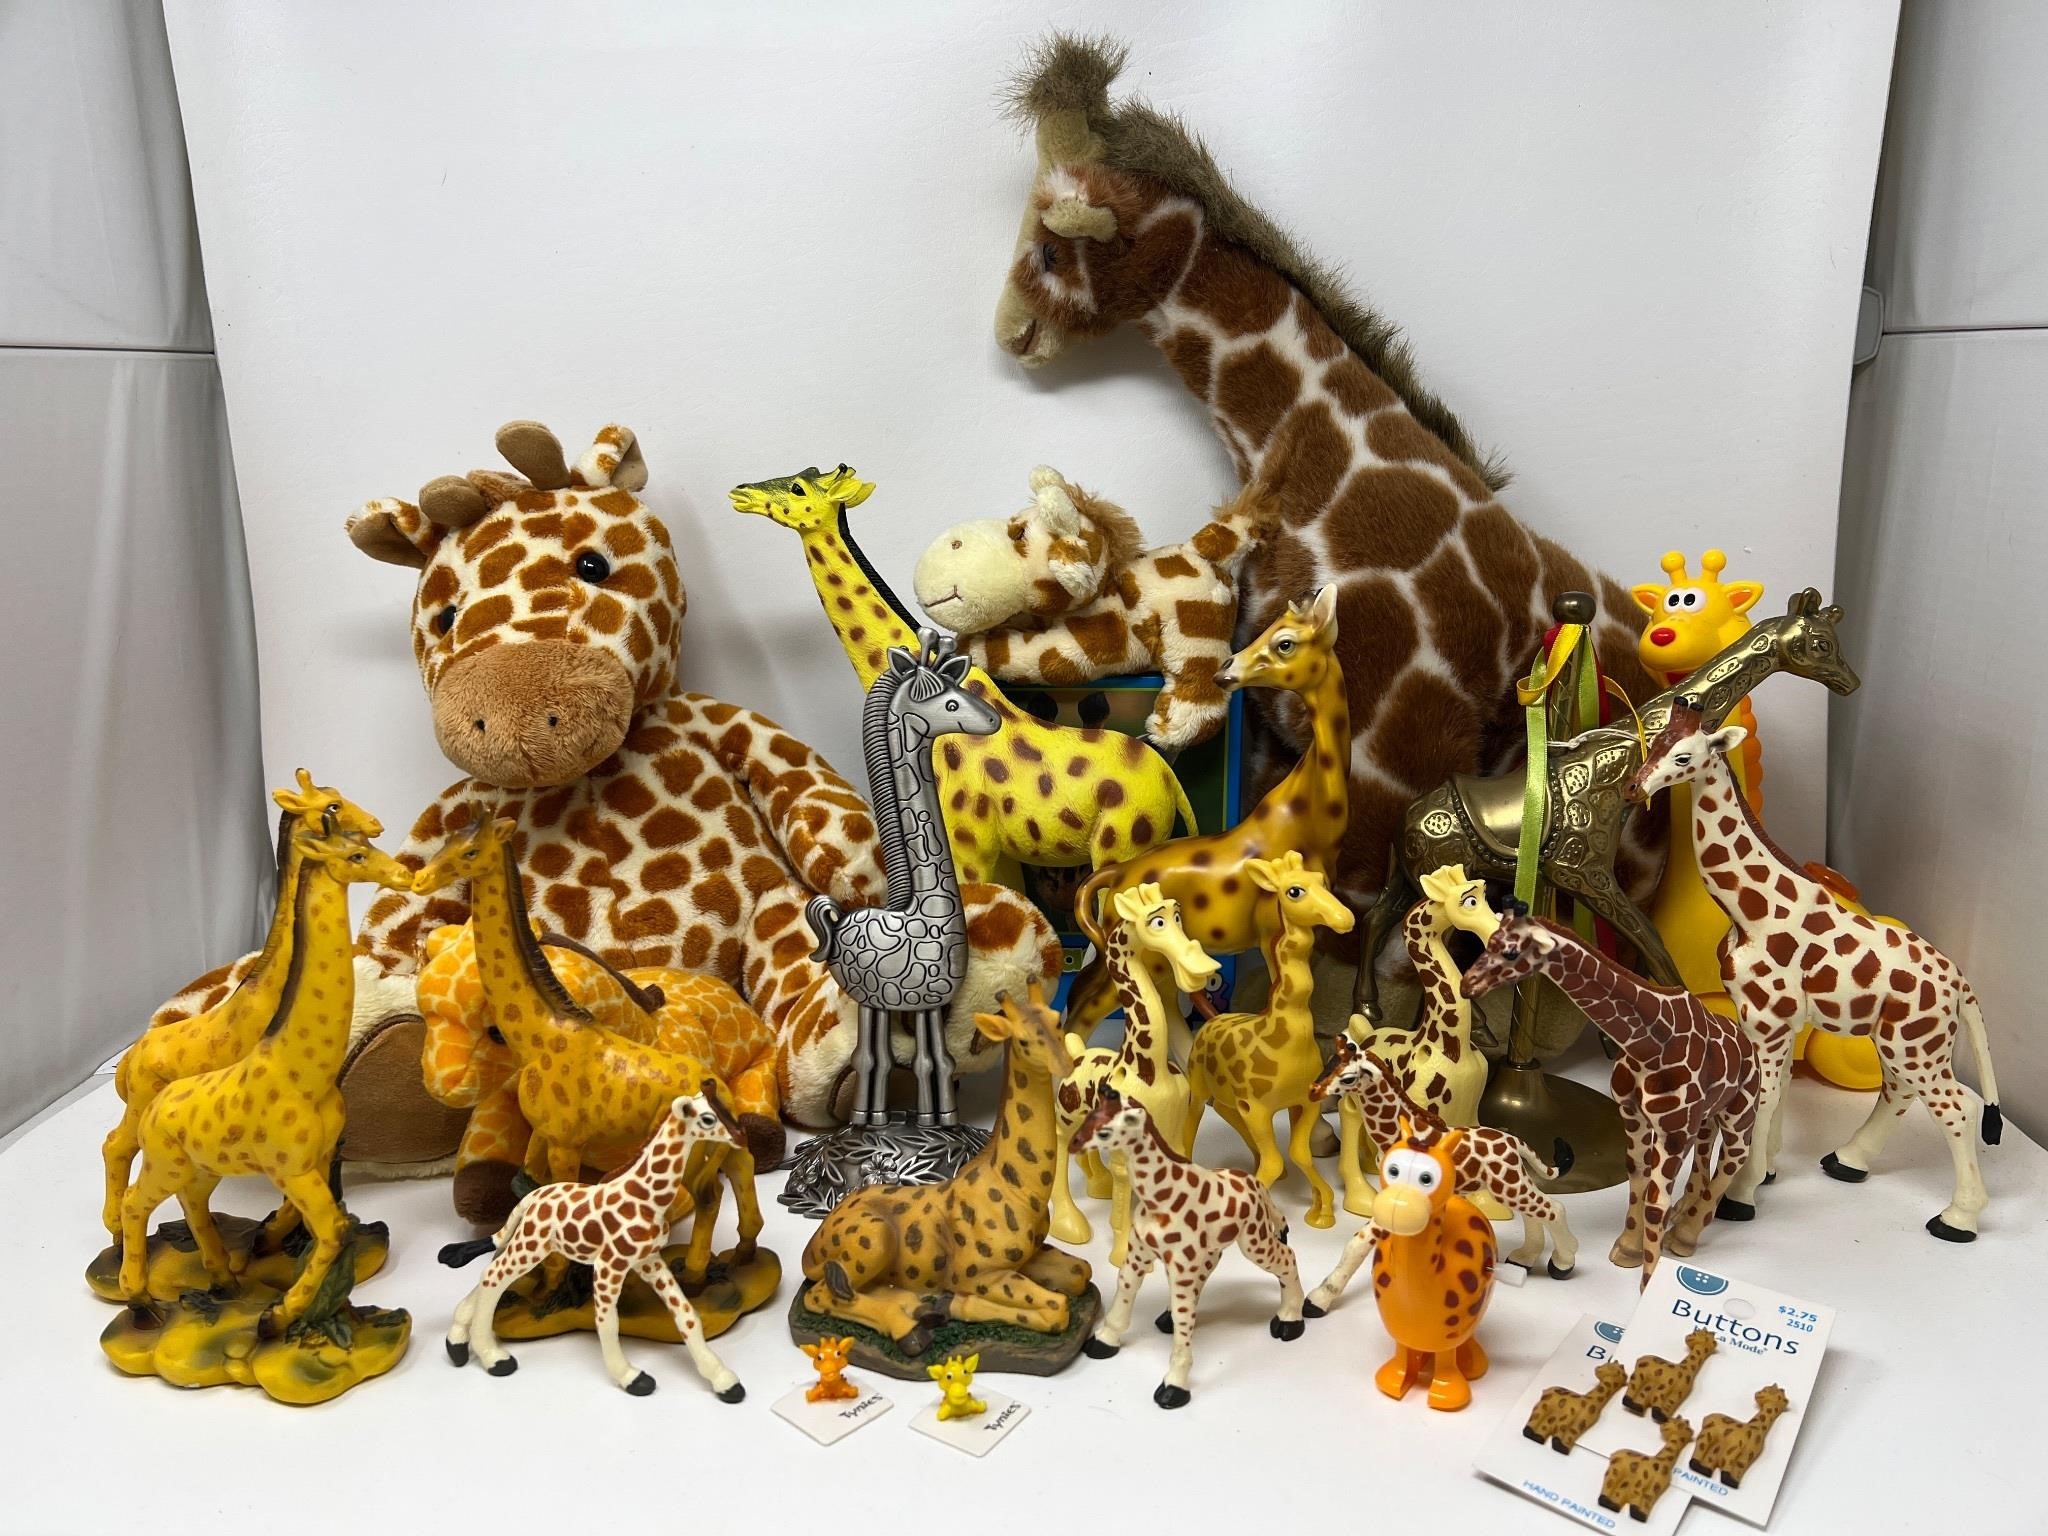 Collection of Giraffes, Plush, Ceramic, Resin